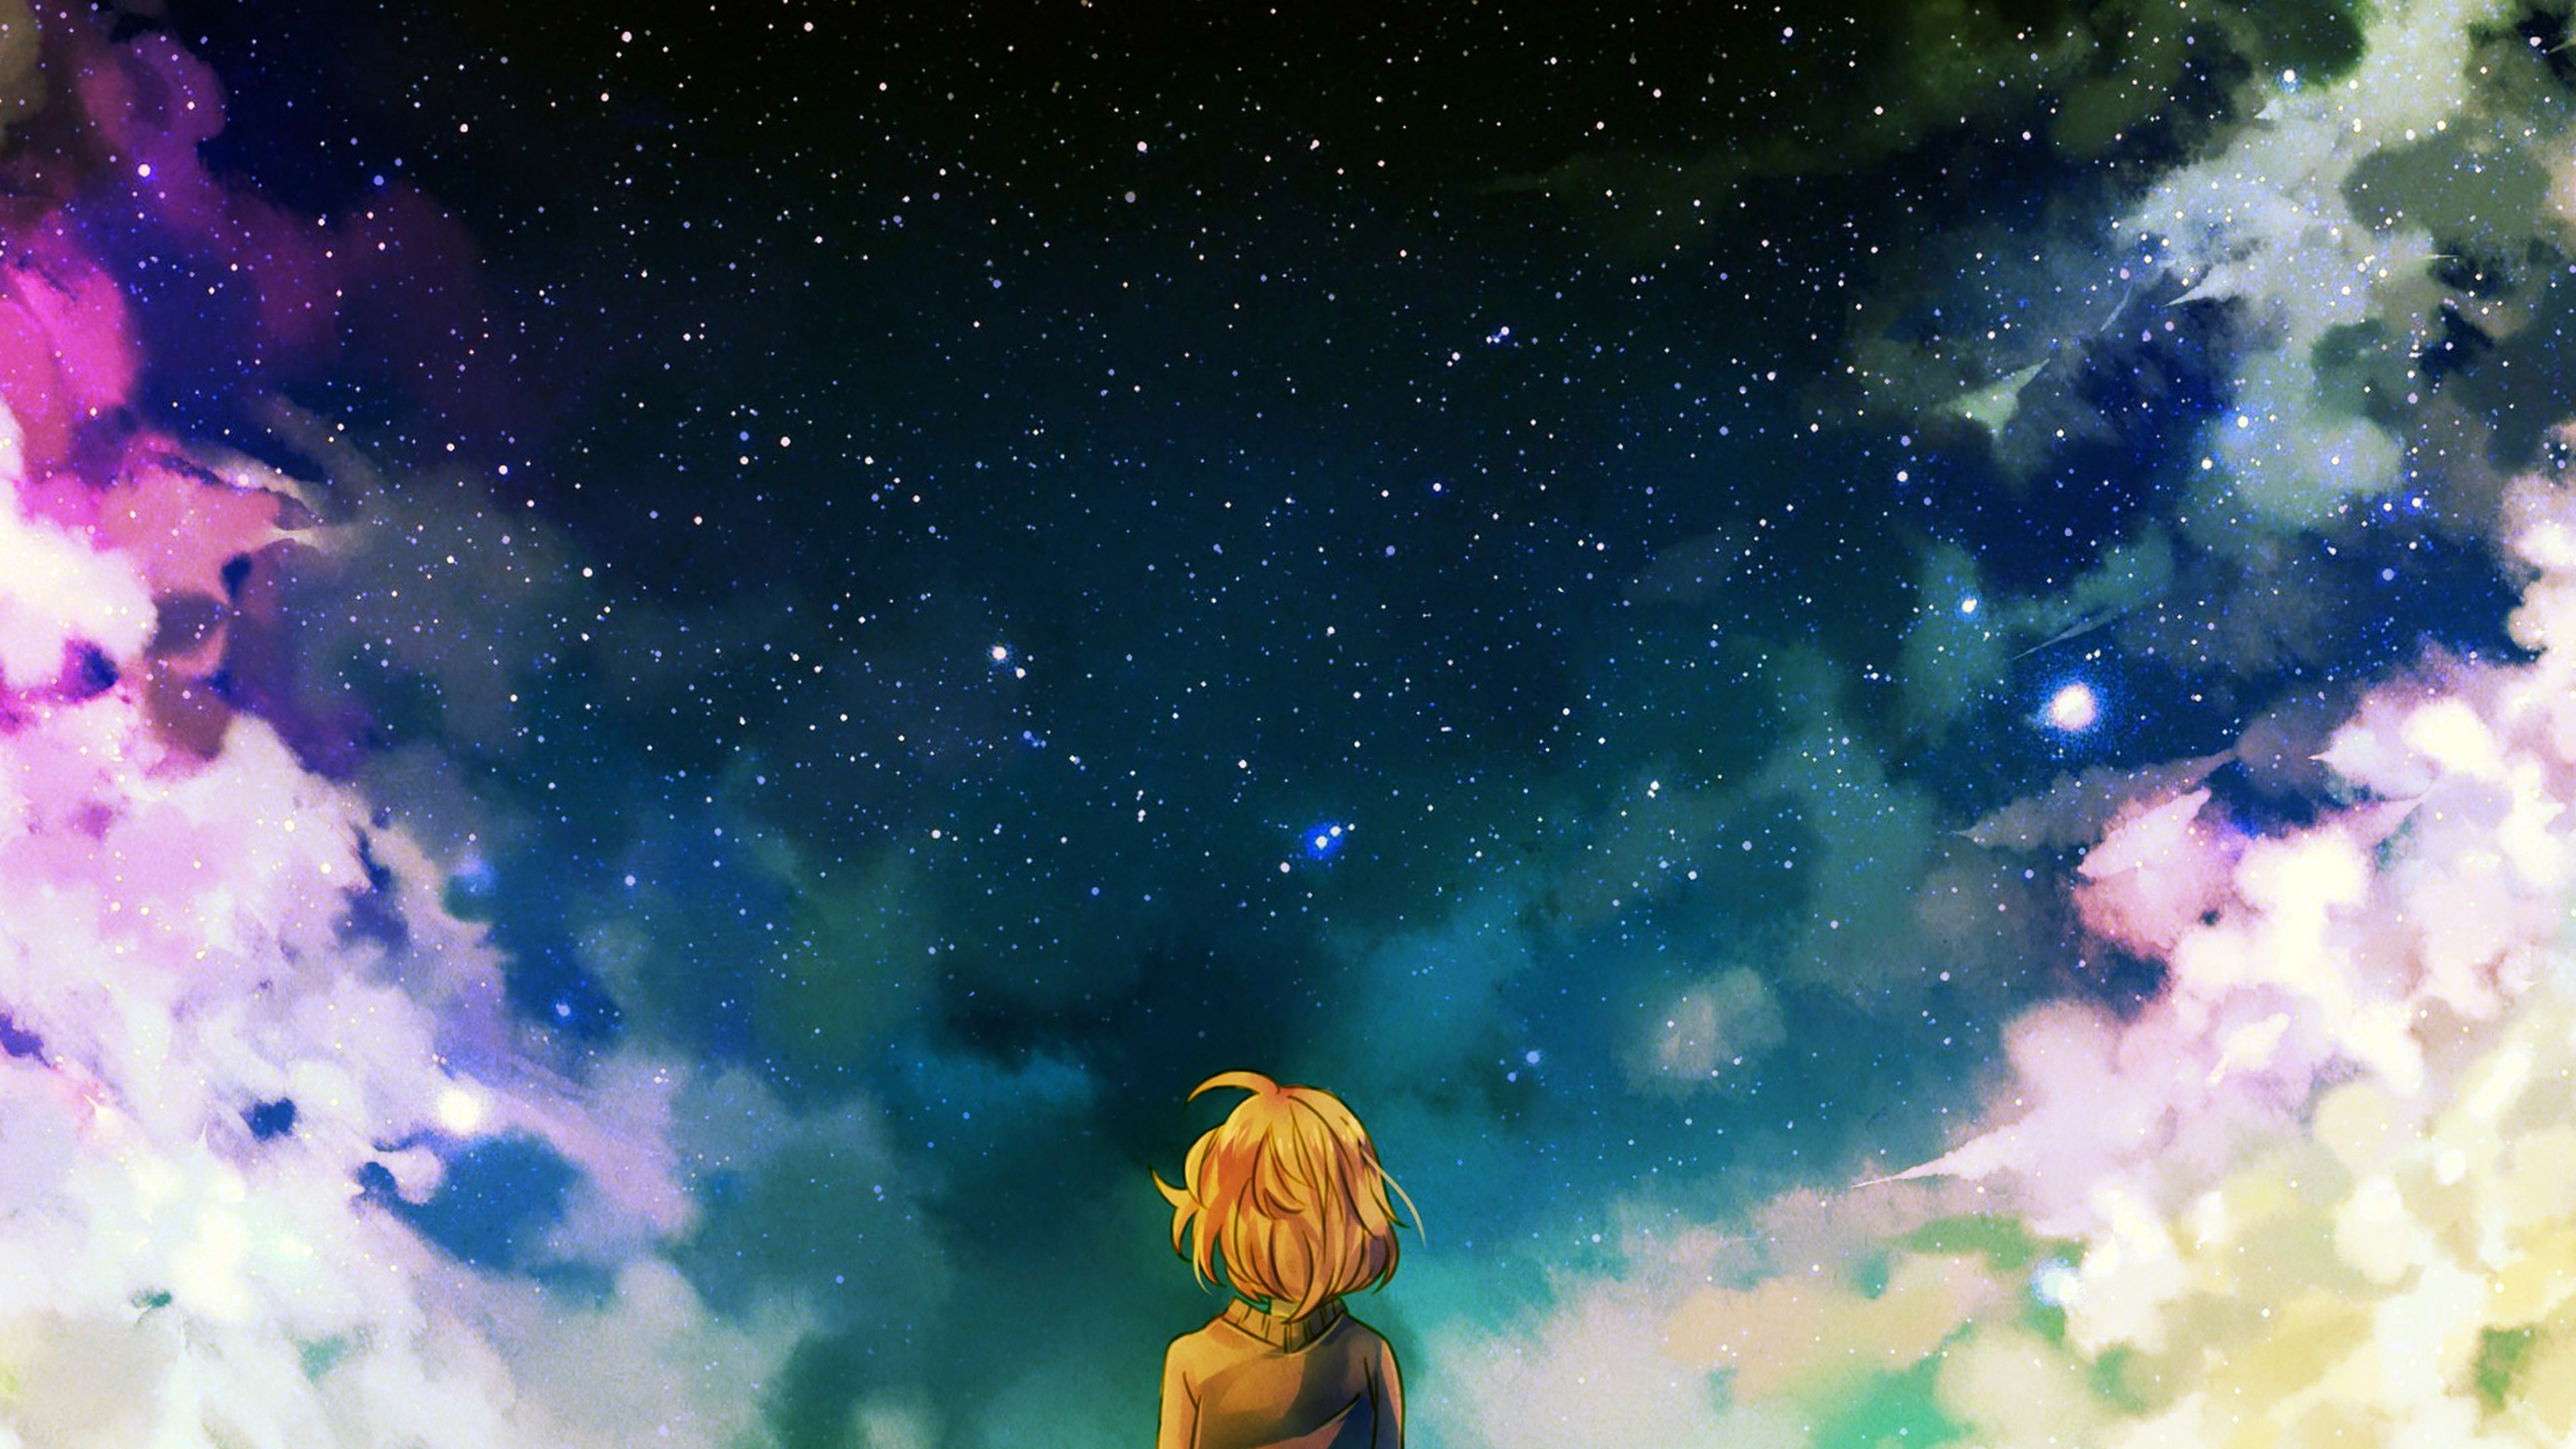 Fondos de pantalla anime kawaii HD para pc stella nova wonderland with image cute